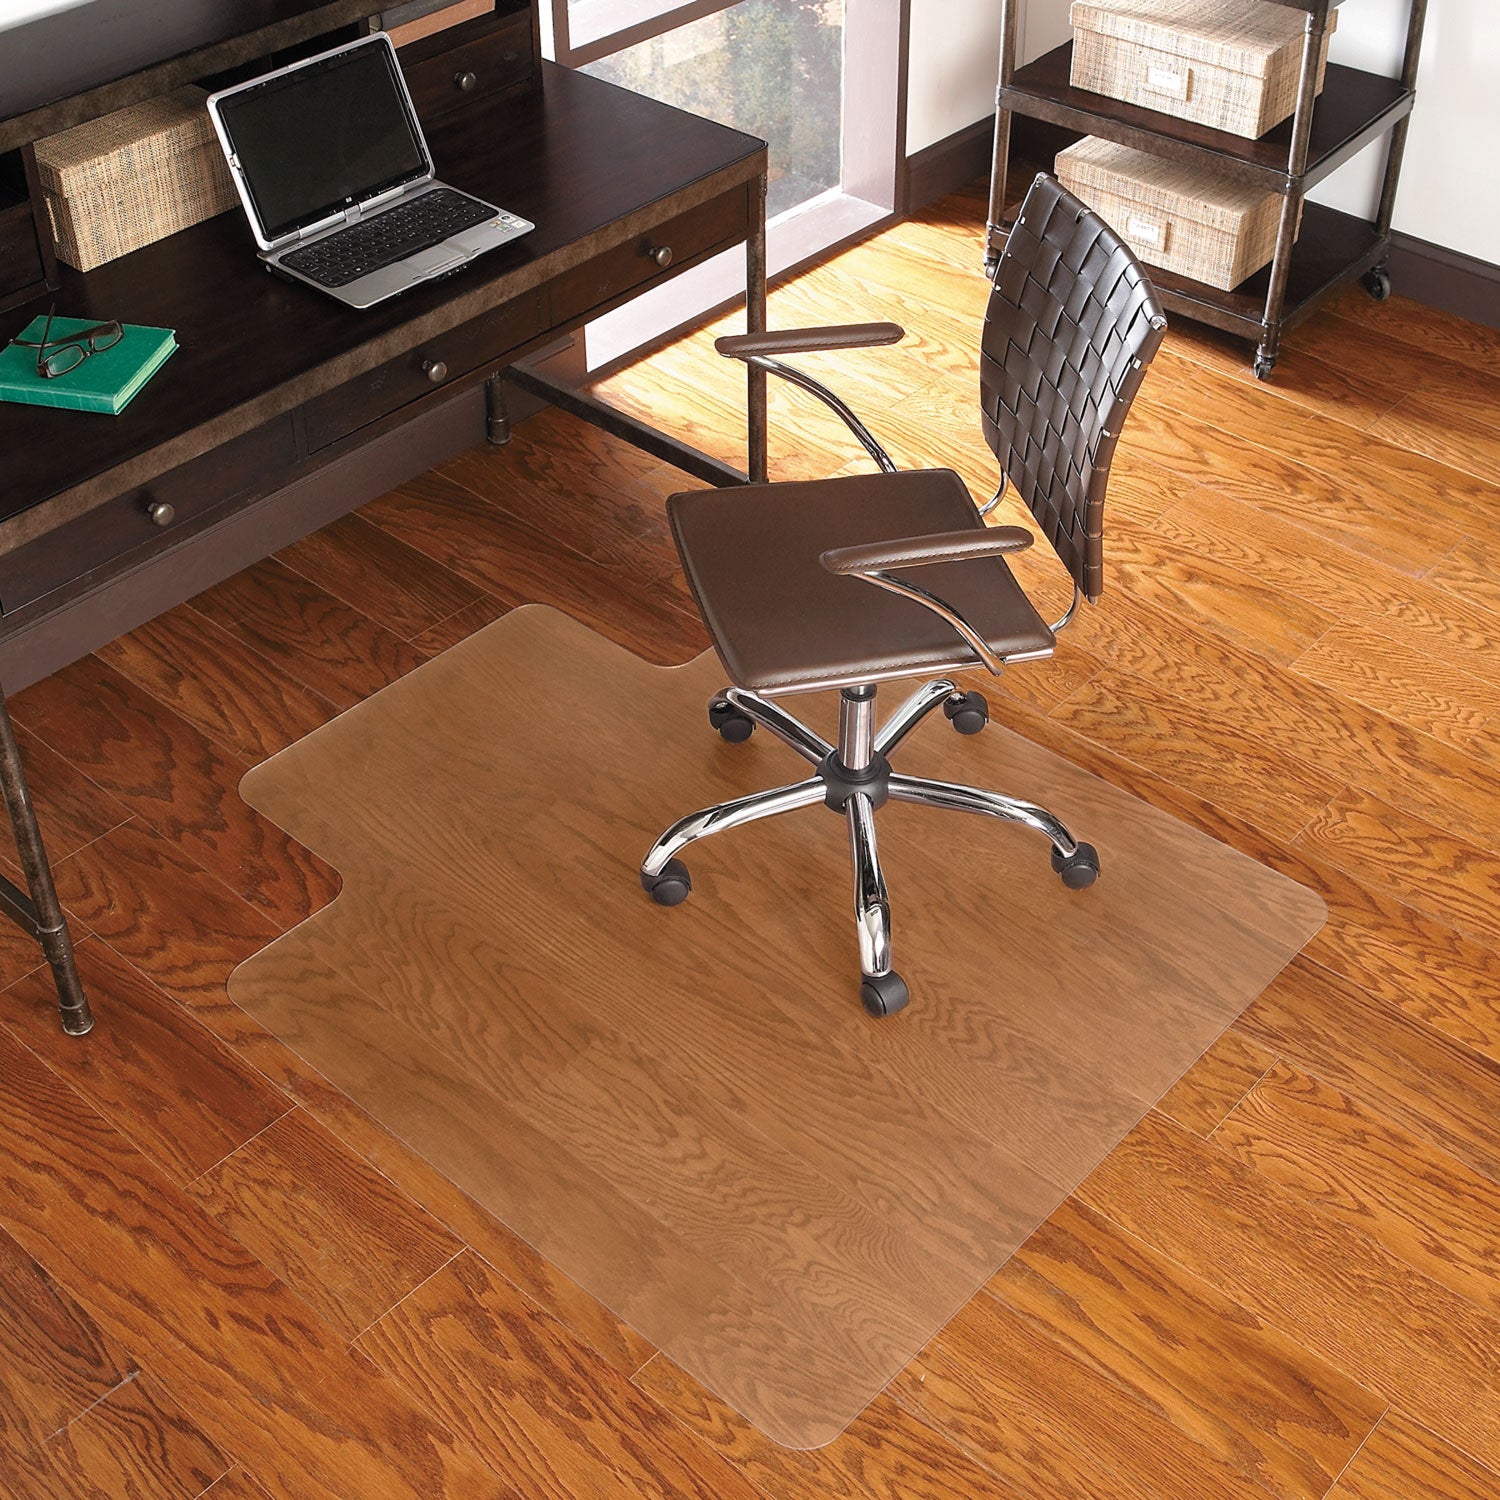 everlife-chair-mat-for-hard-floors-heavy-use-rectangular-with-lip-36-x-48-clear_esr131115 - 1